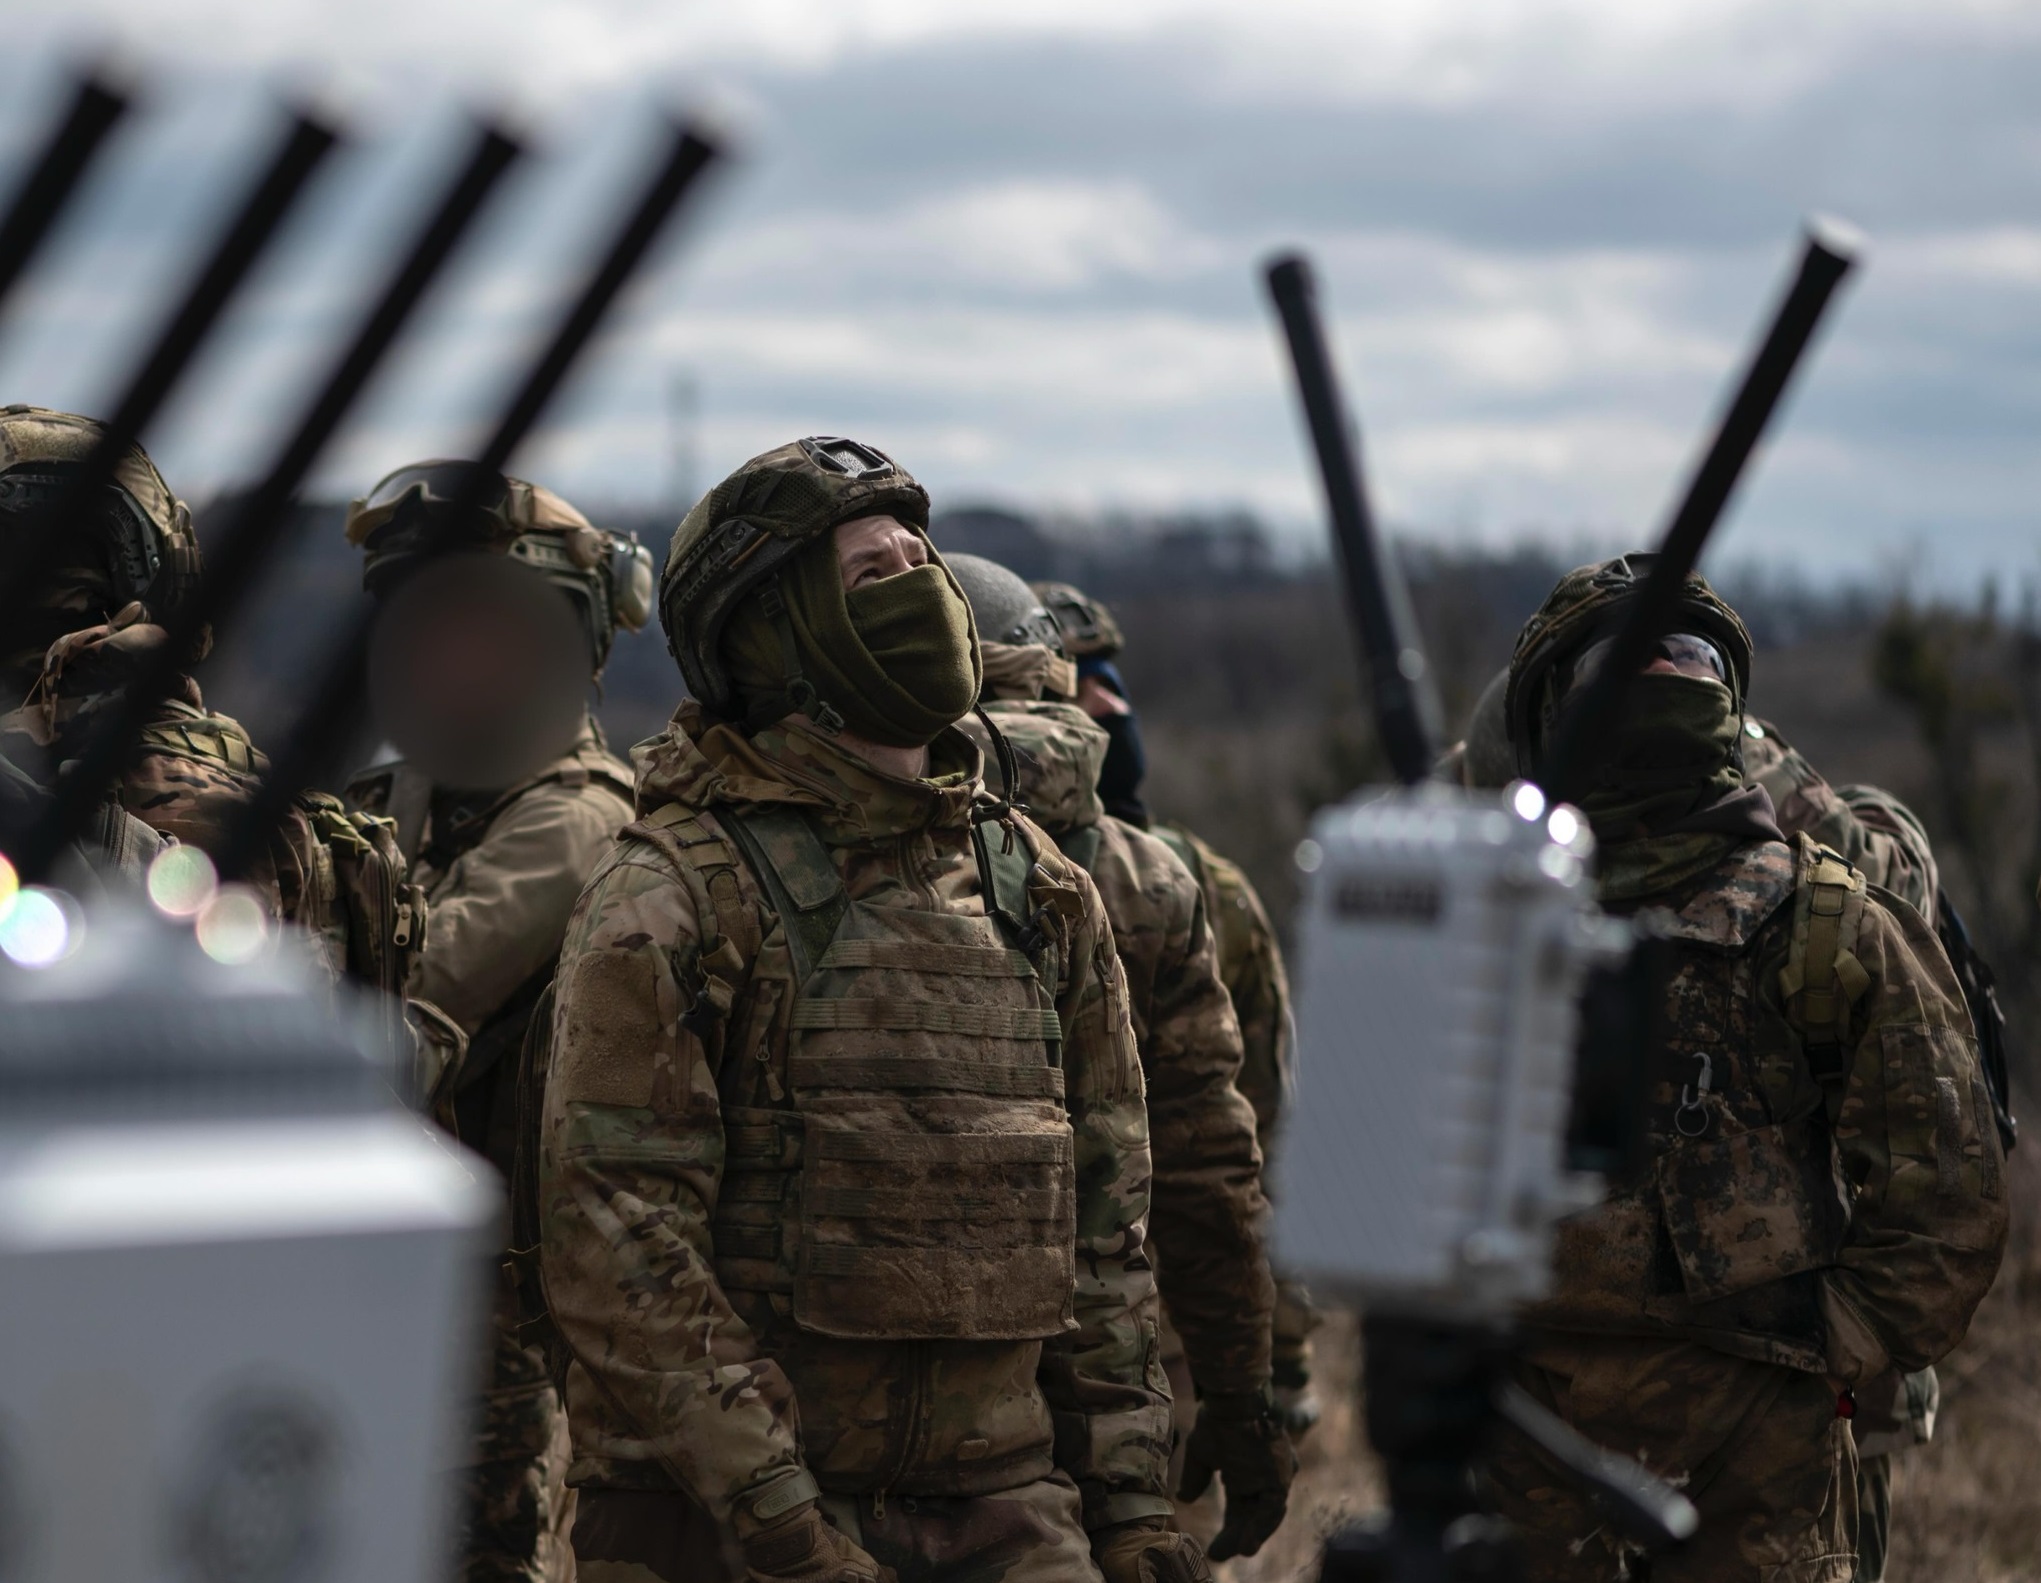 The EW backpack revolution: How Ukrainian portable tech jams Russian drones